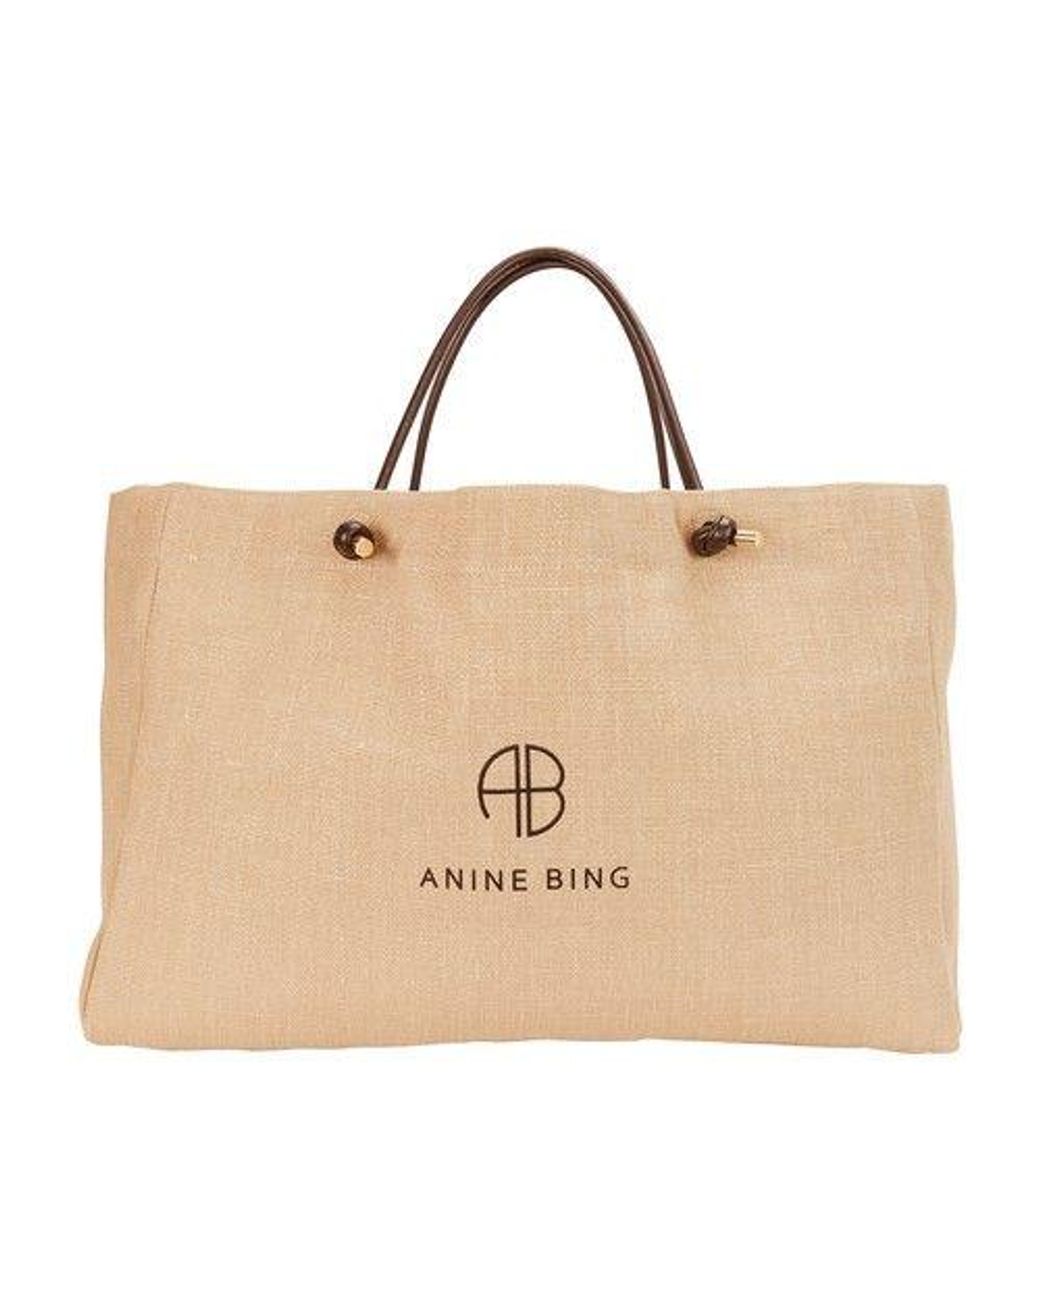 Anine Bing Saffron Bag in Natural